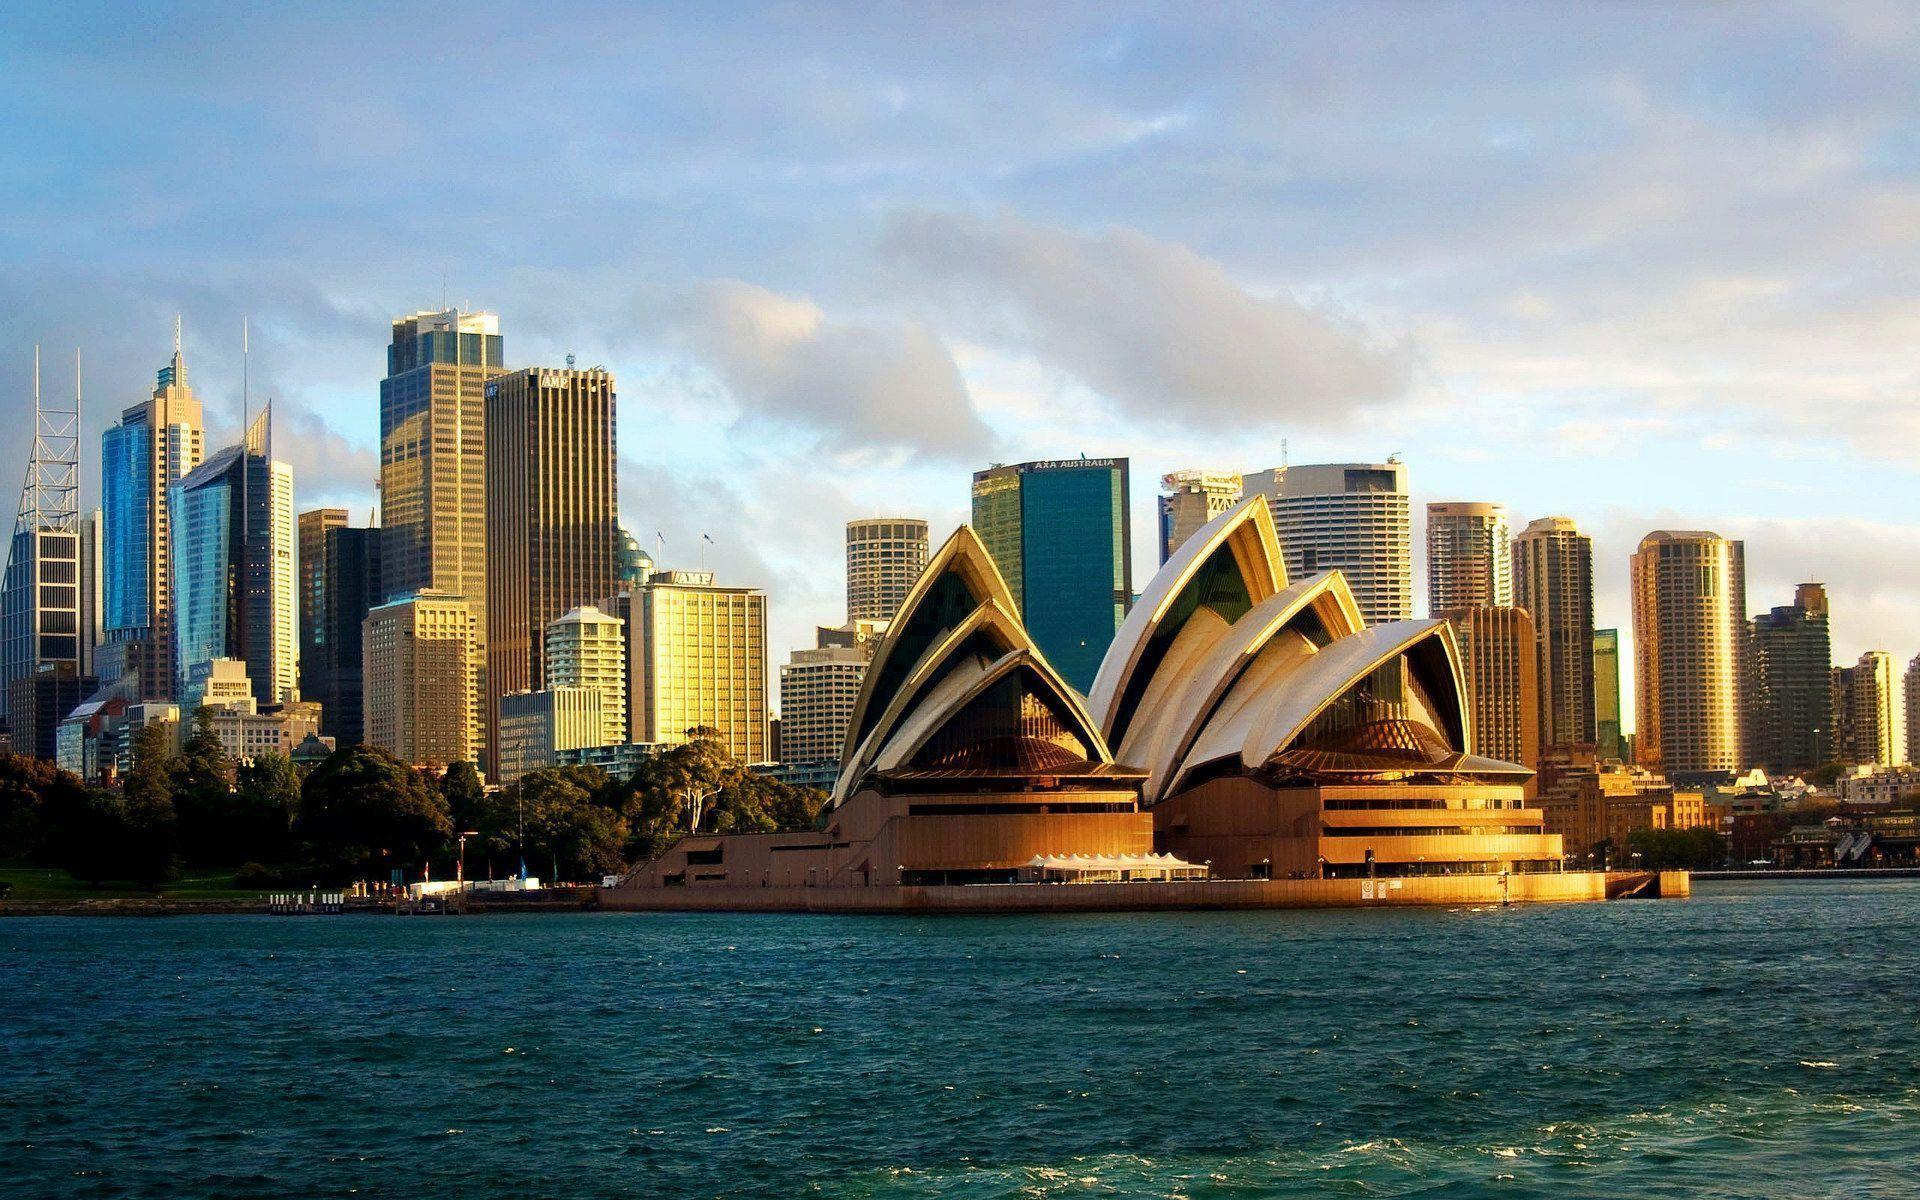 Sydney Opera House 32 Image. hdwallpaper